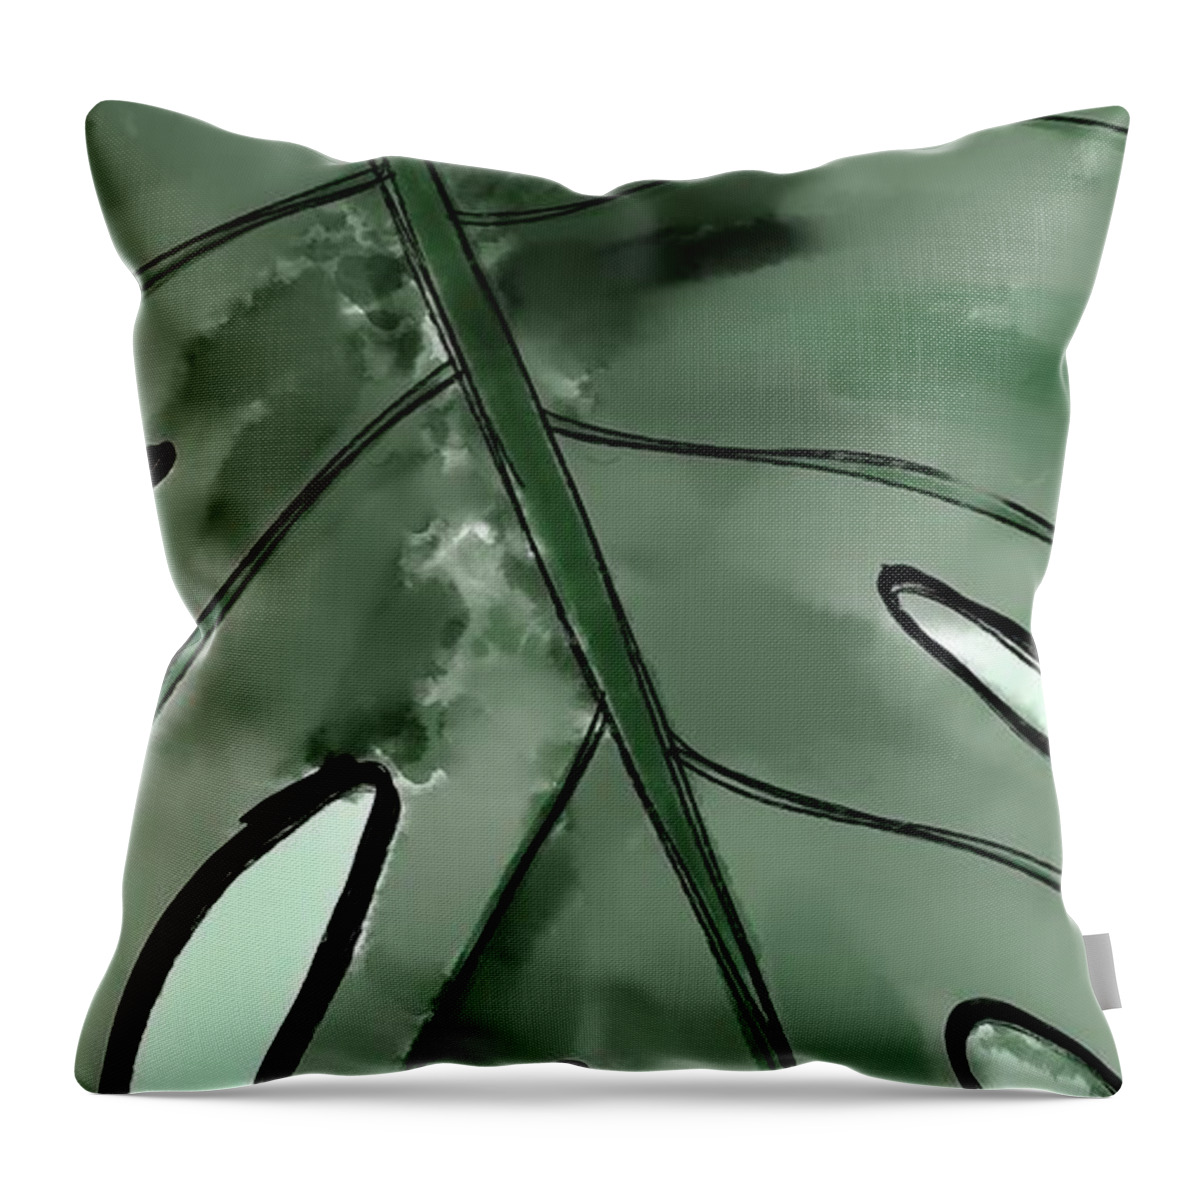 Leaf Throw Pillow featuring the digital art Sasha - Minimal, Modern - Abstract Leaf Painting by Studio Grafiikka